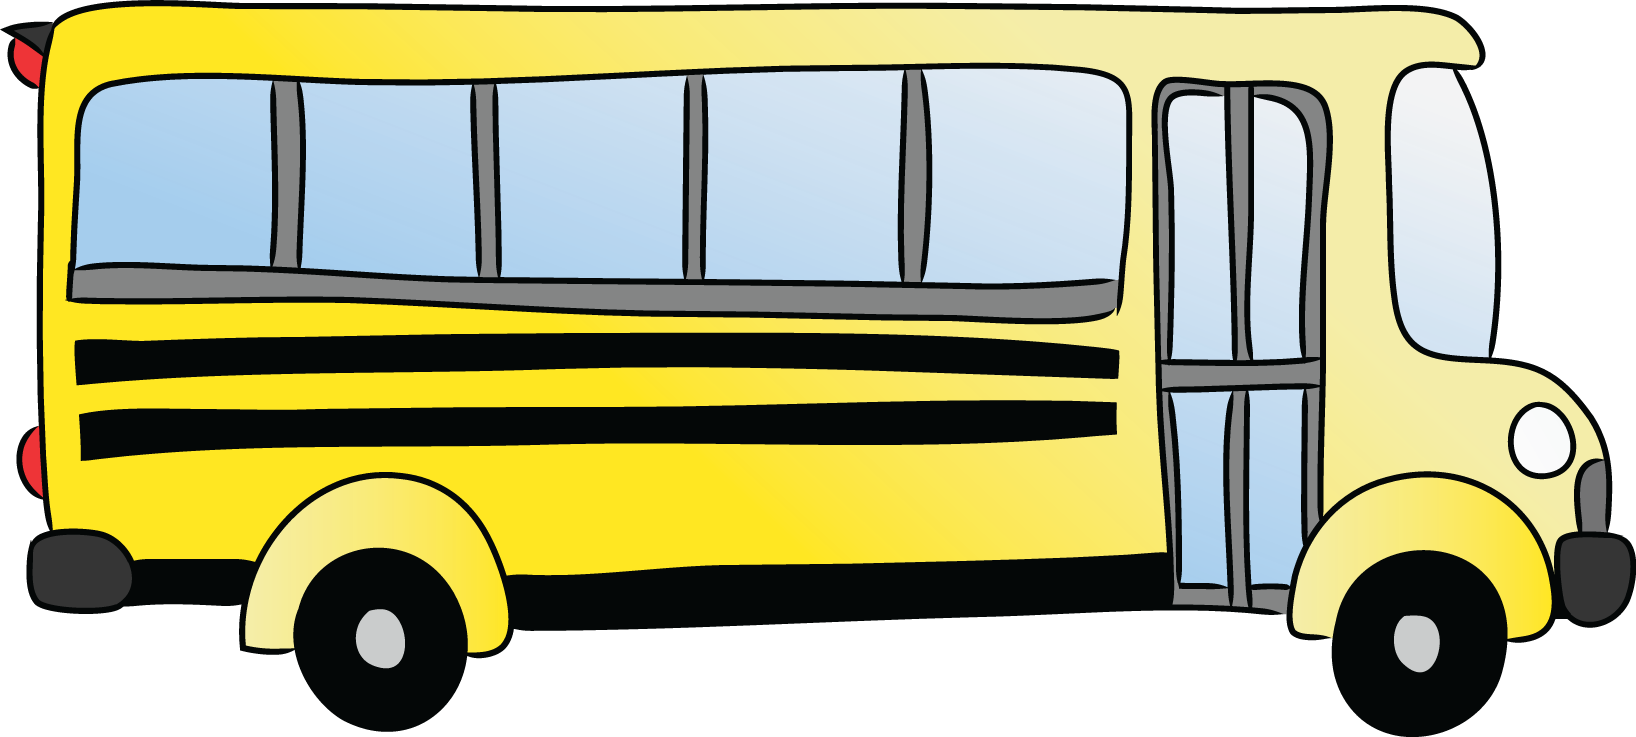 school bus uniform animated people